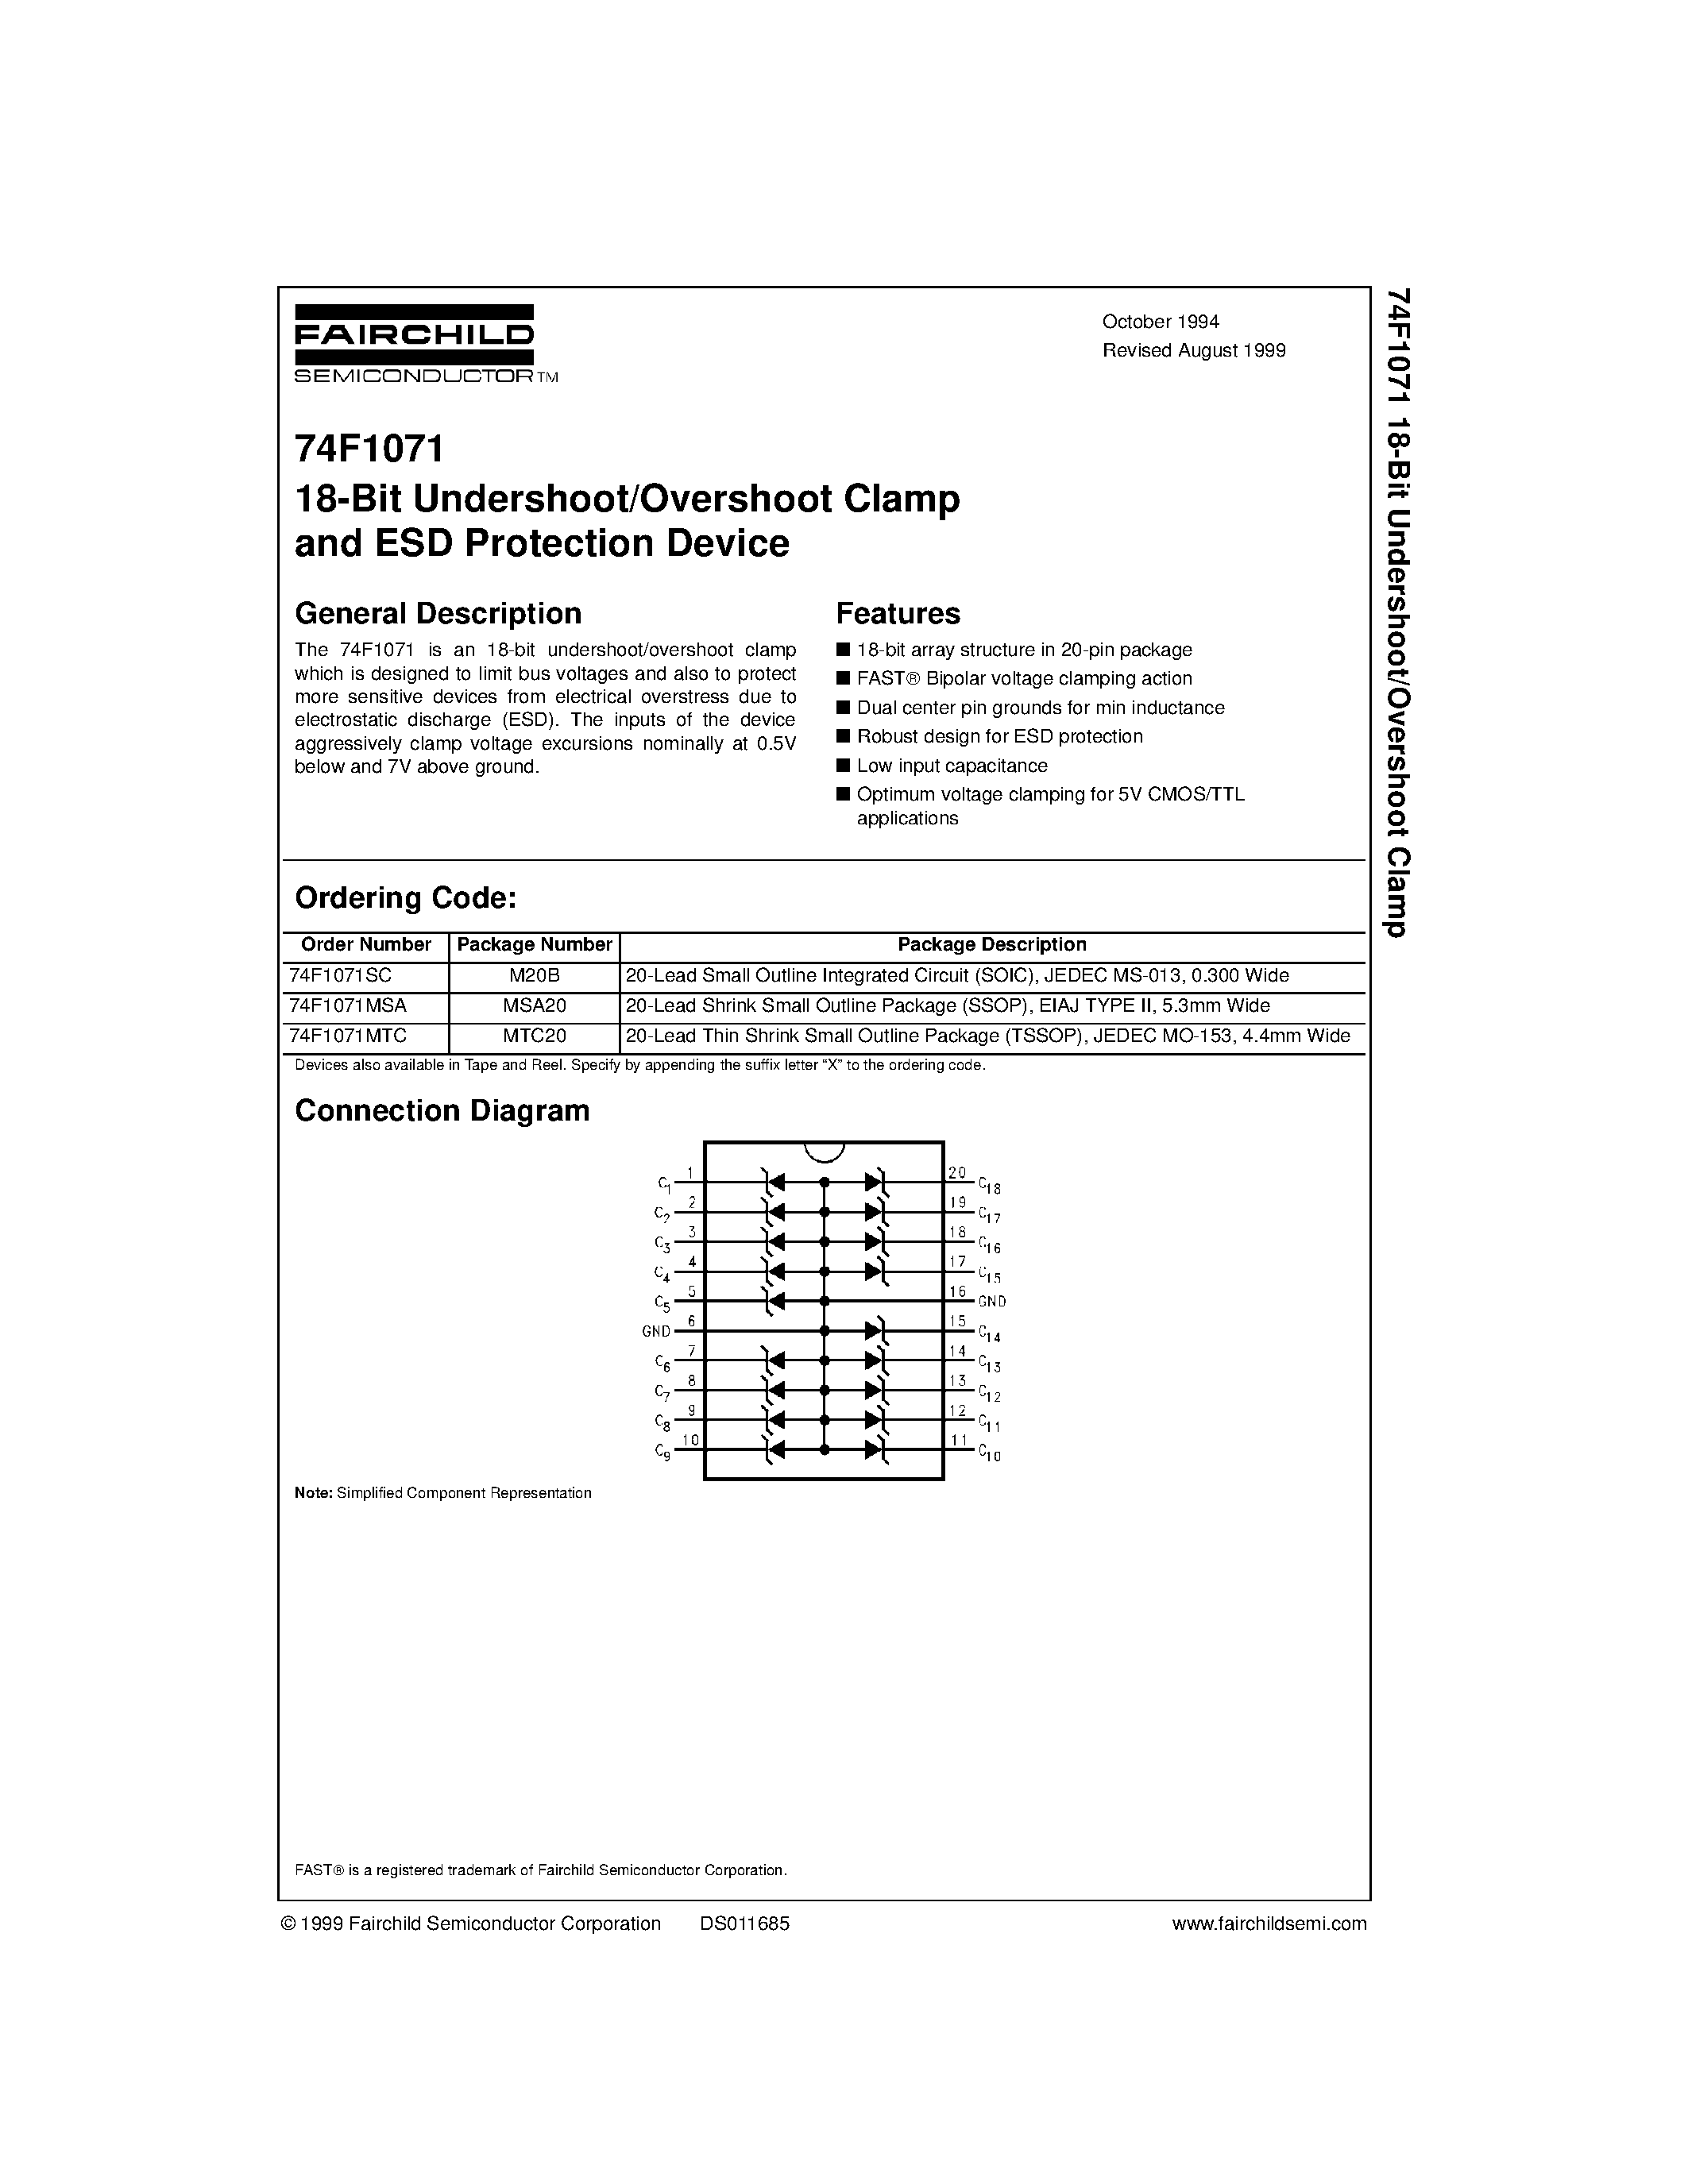 Datasheet 74F1071SC - 18-Bit Undershoot/Overshoot Clamp page 1